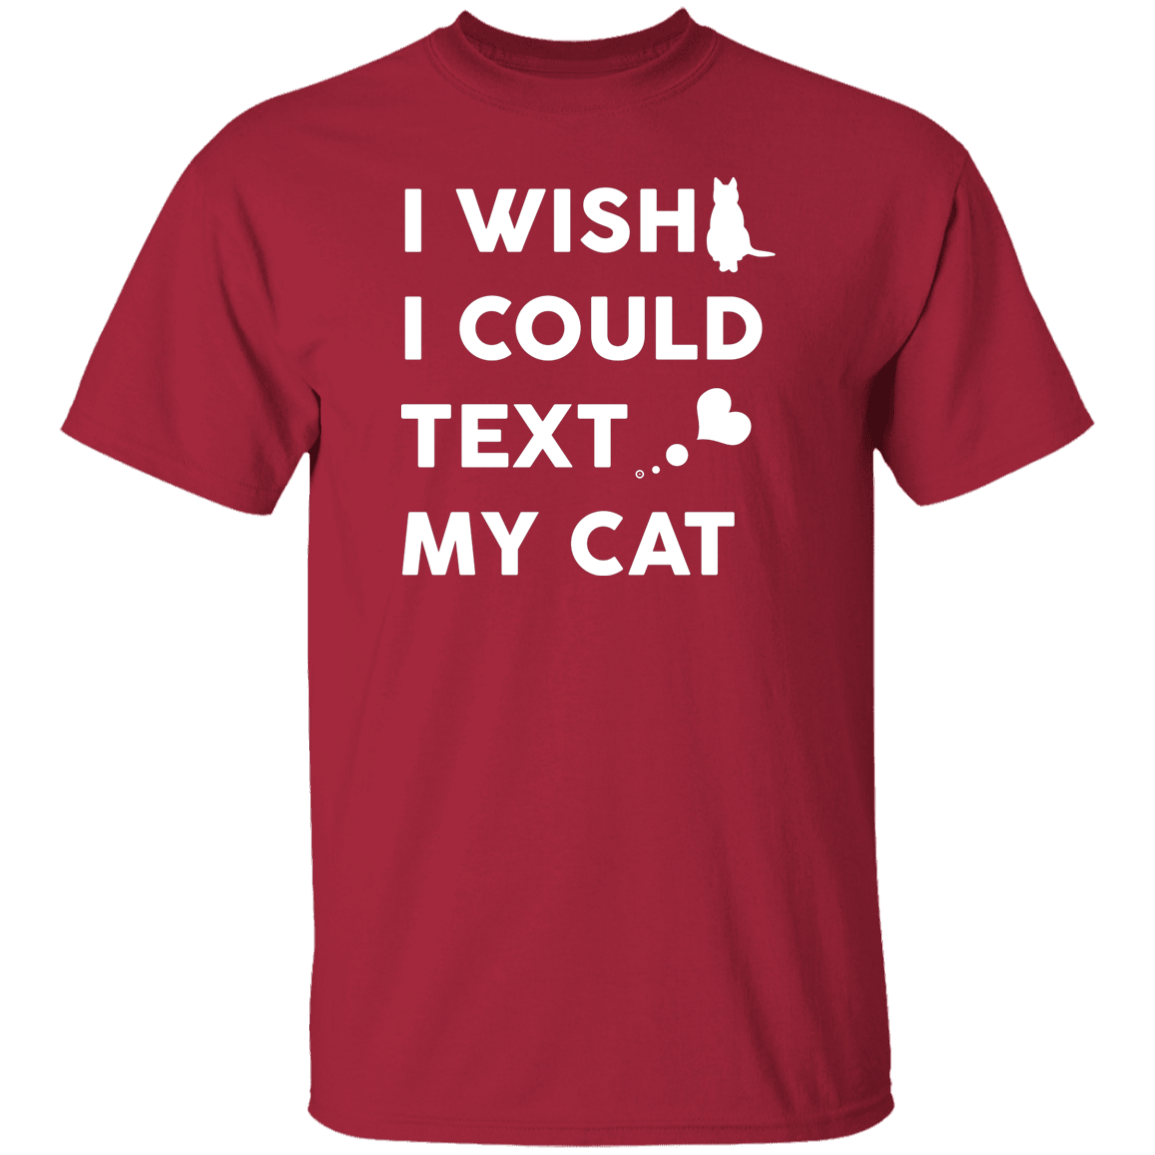 I Wish I Could Text My Cat - T Shirt.